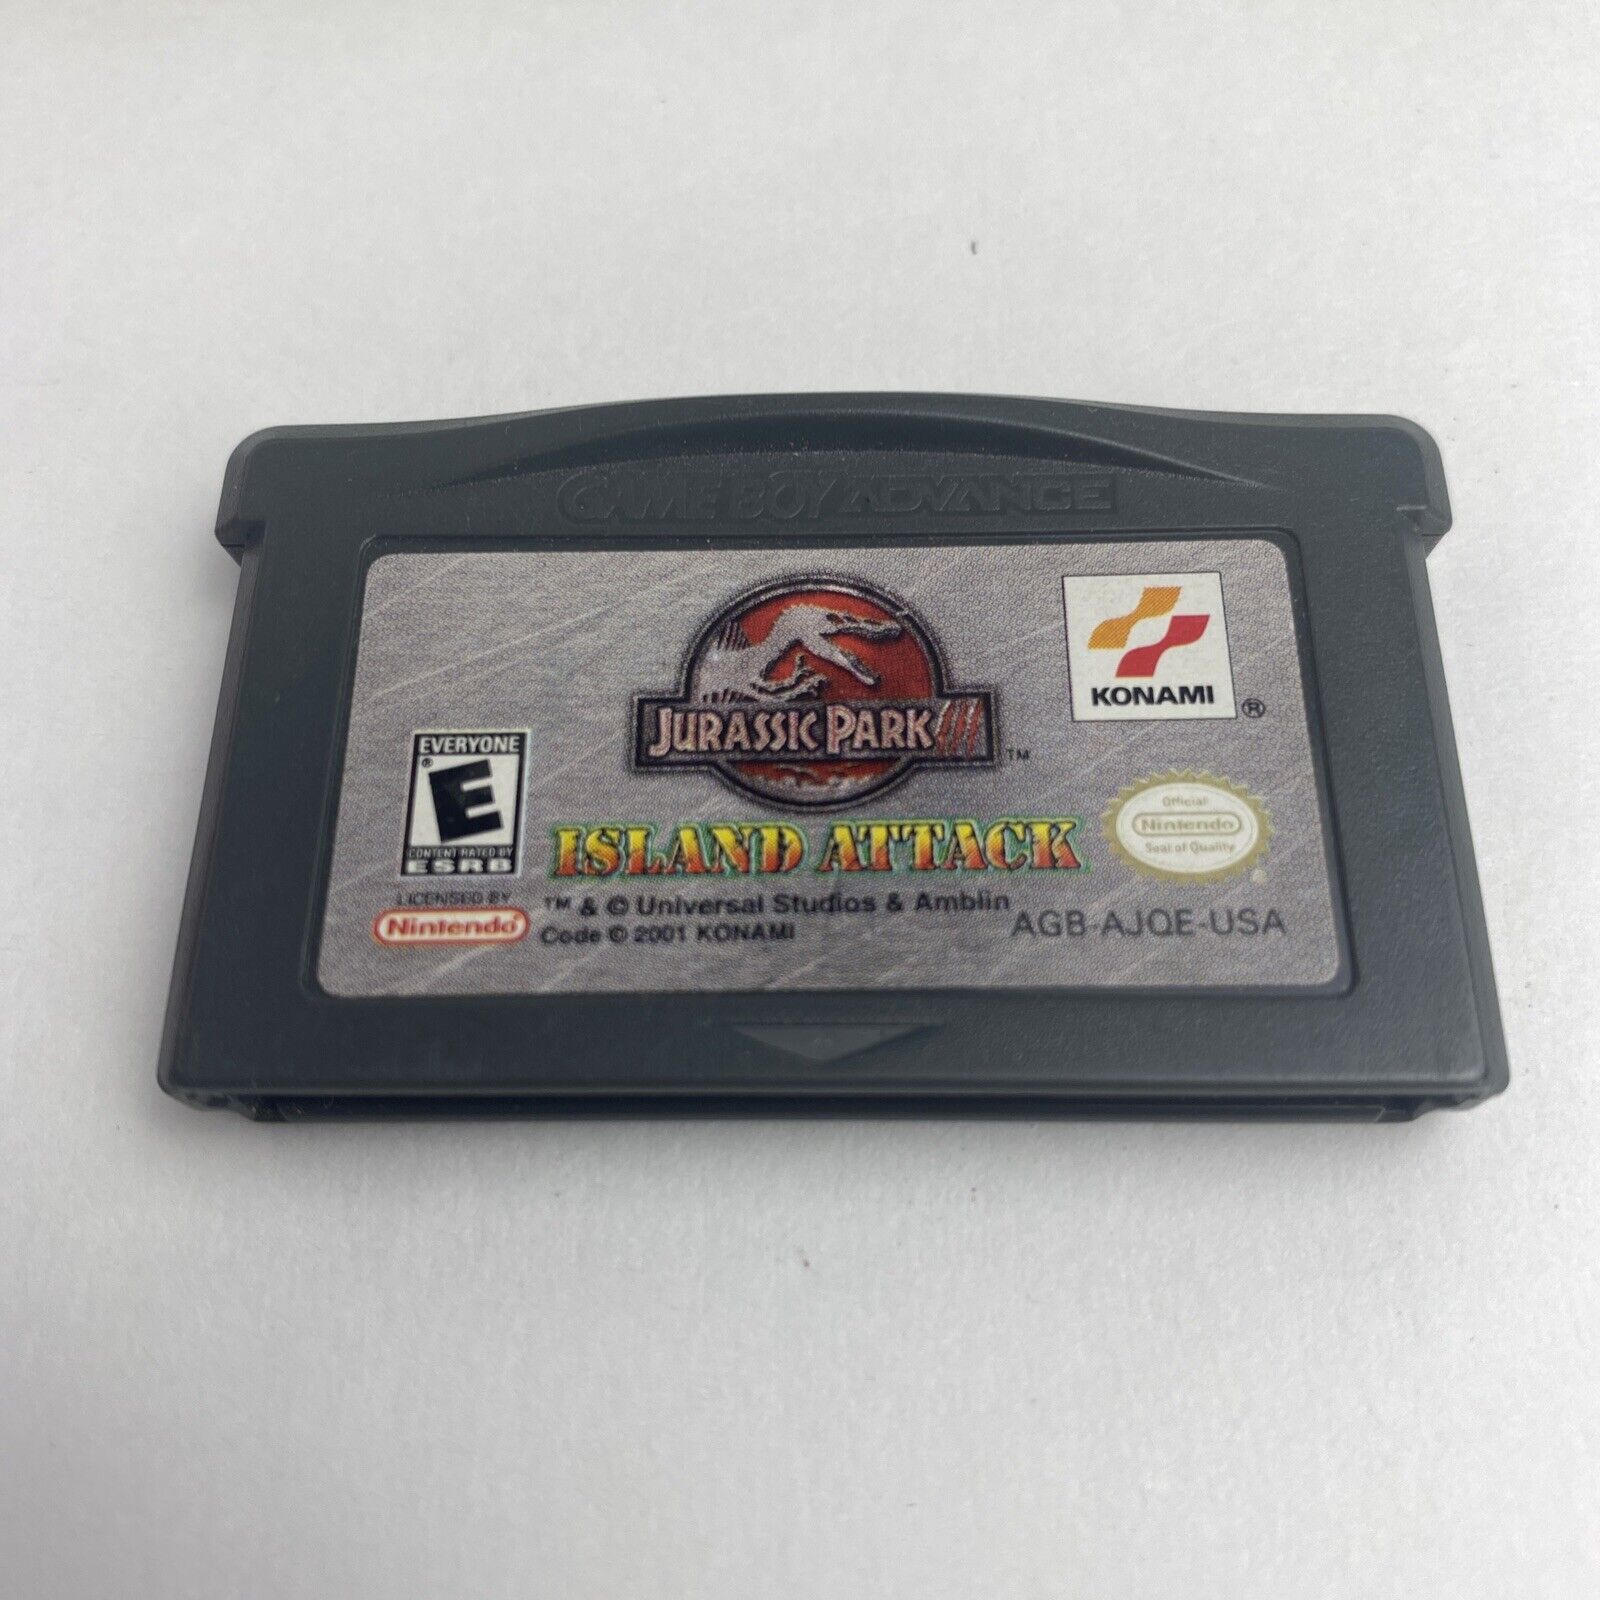 Jurassic Park III: Island Attack (Nintendo Game Boy Advance, 2001) Cartridge